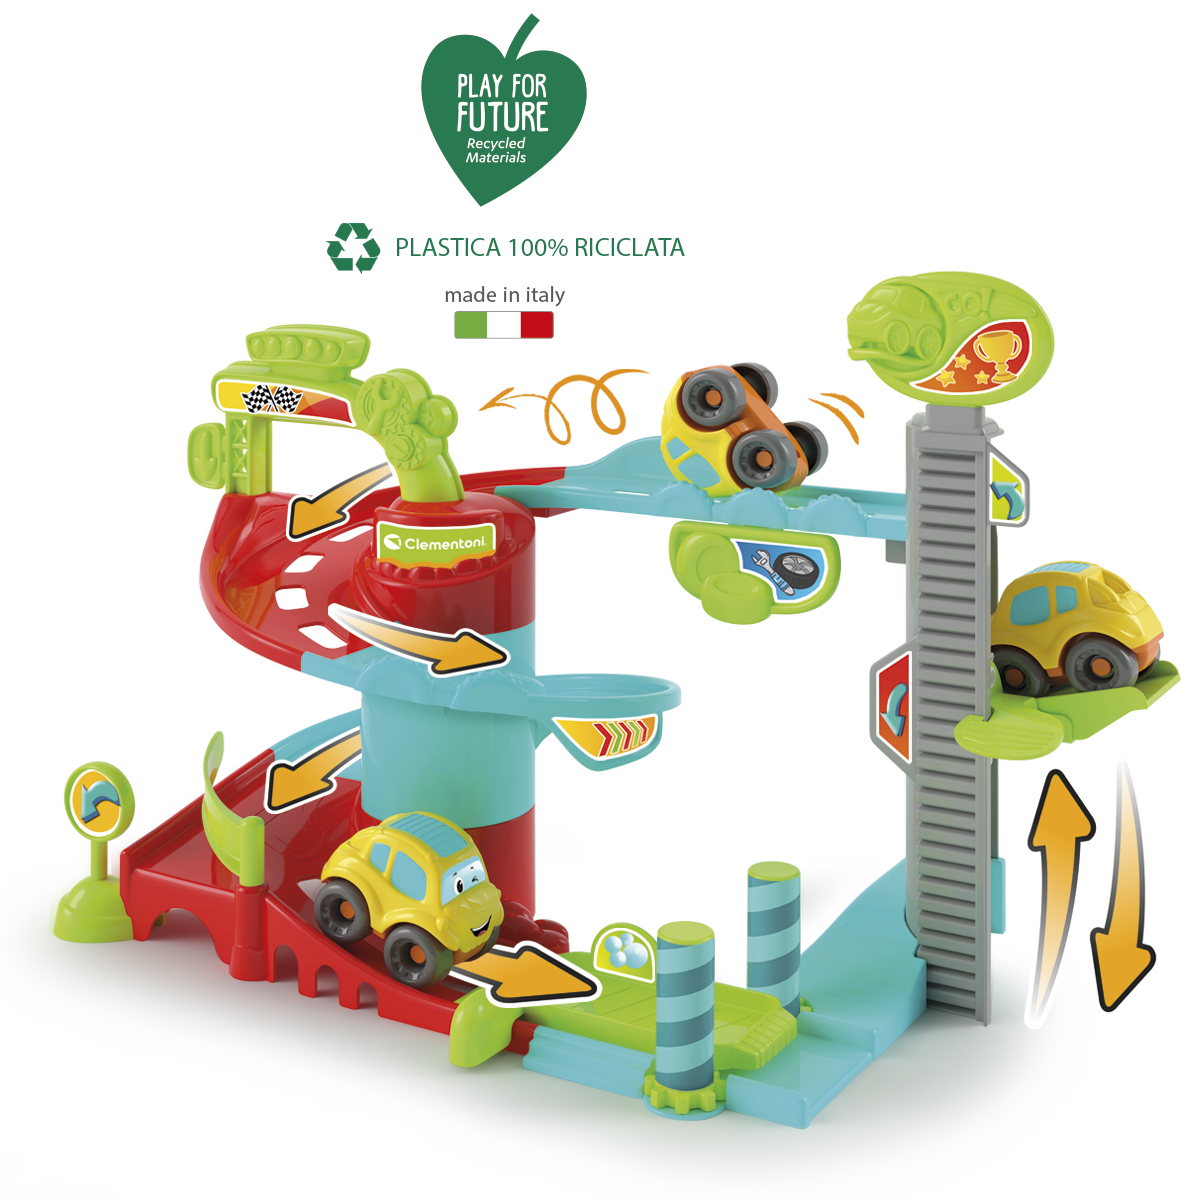 Baby clementoni - fun garage - baby track - giocattolo interattivo - Baby Clementoni